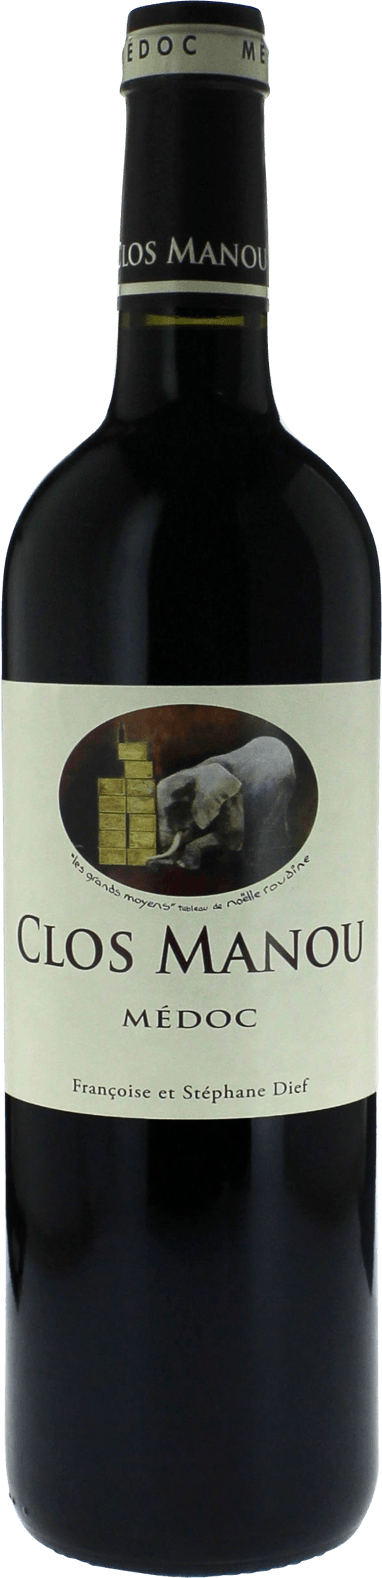 Clos manou 2013 Cru Bourgeois Mdoc, Slection Bordeaux Rouge